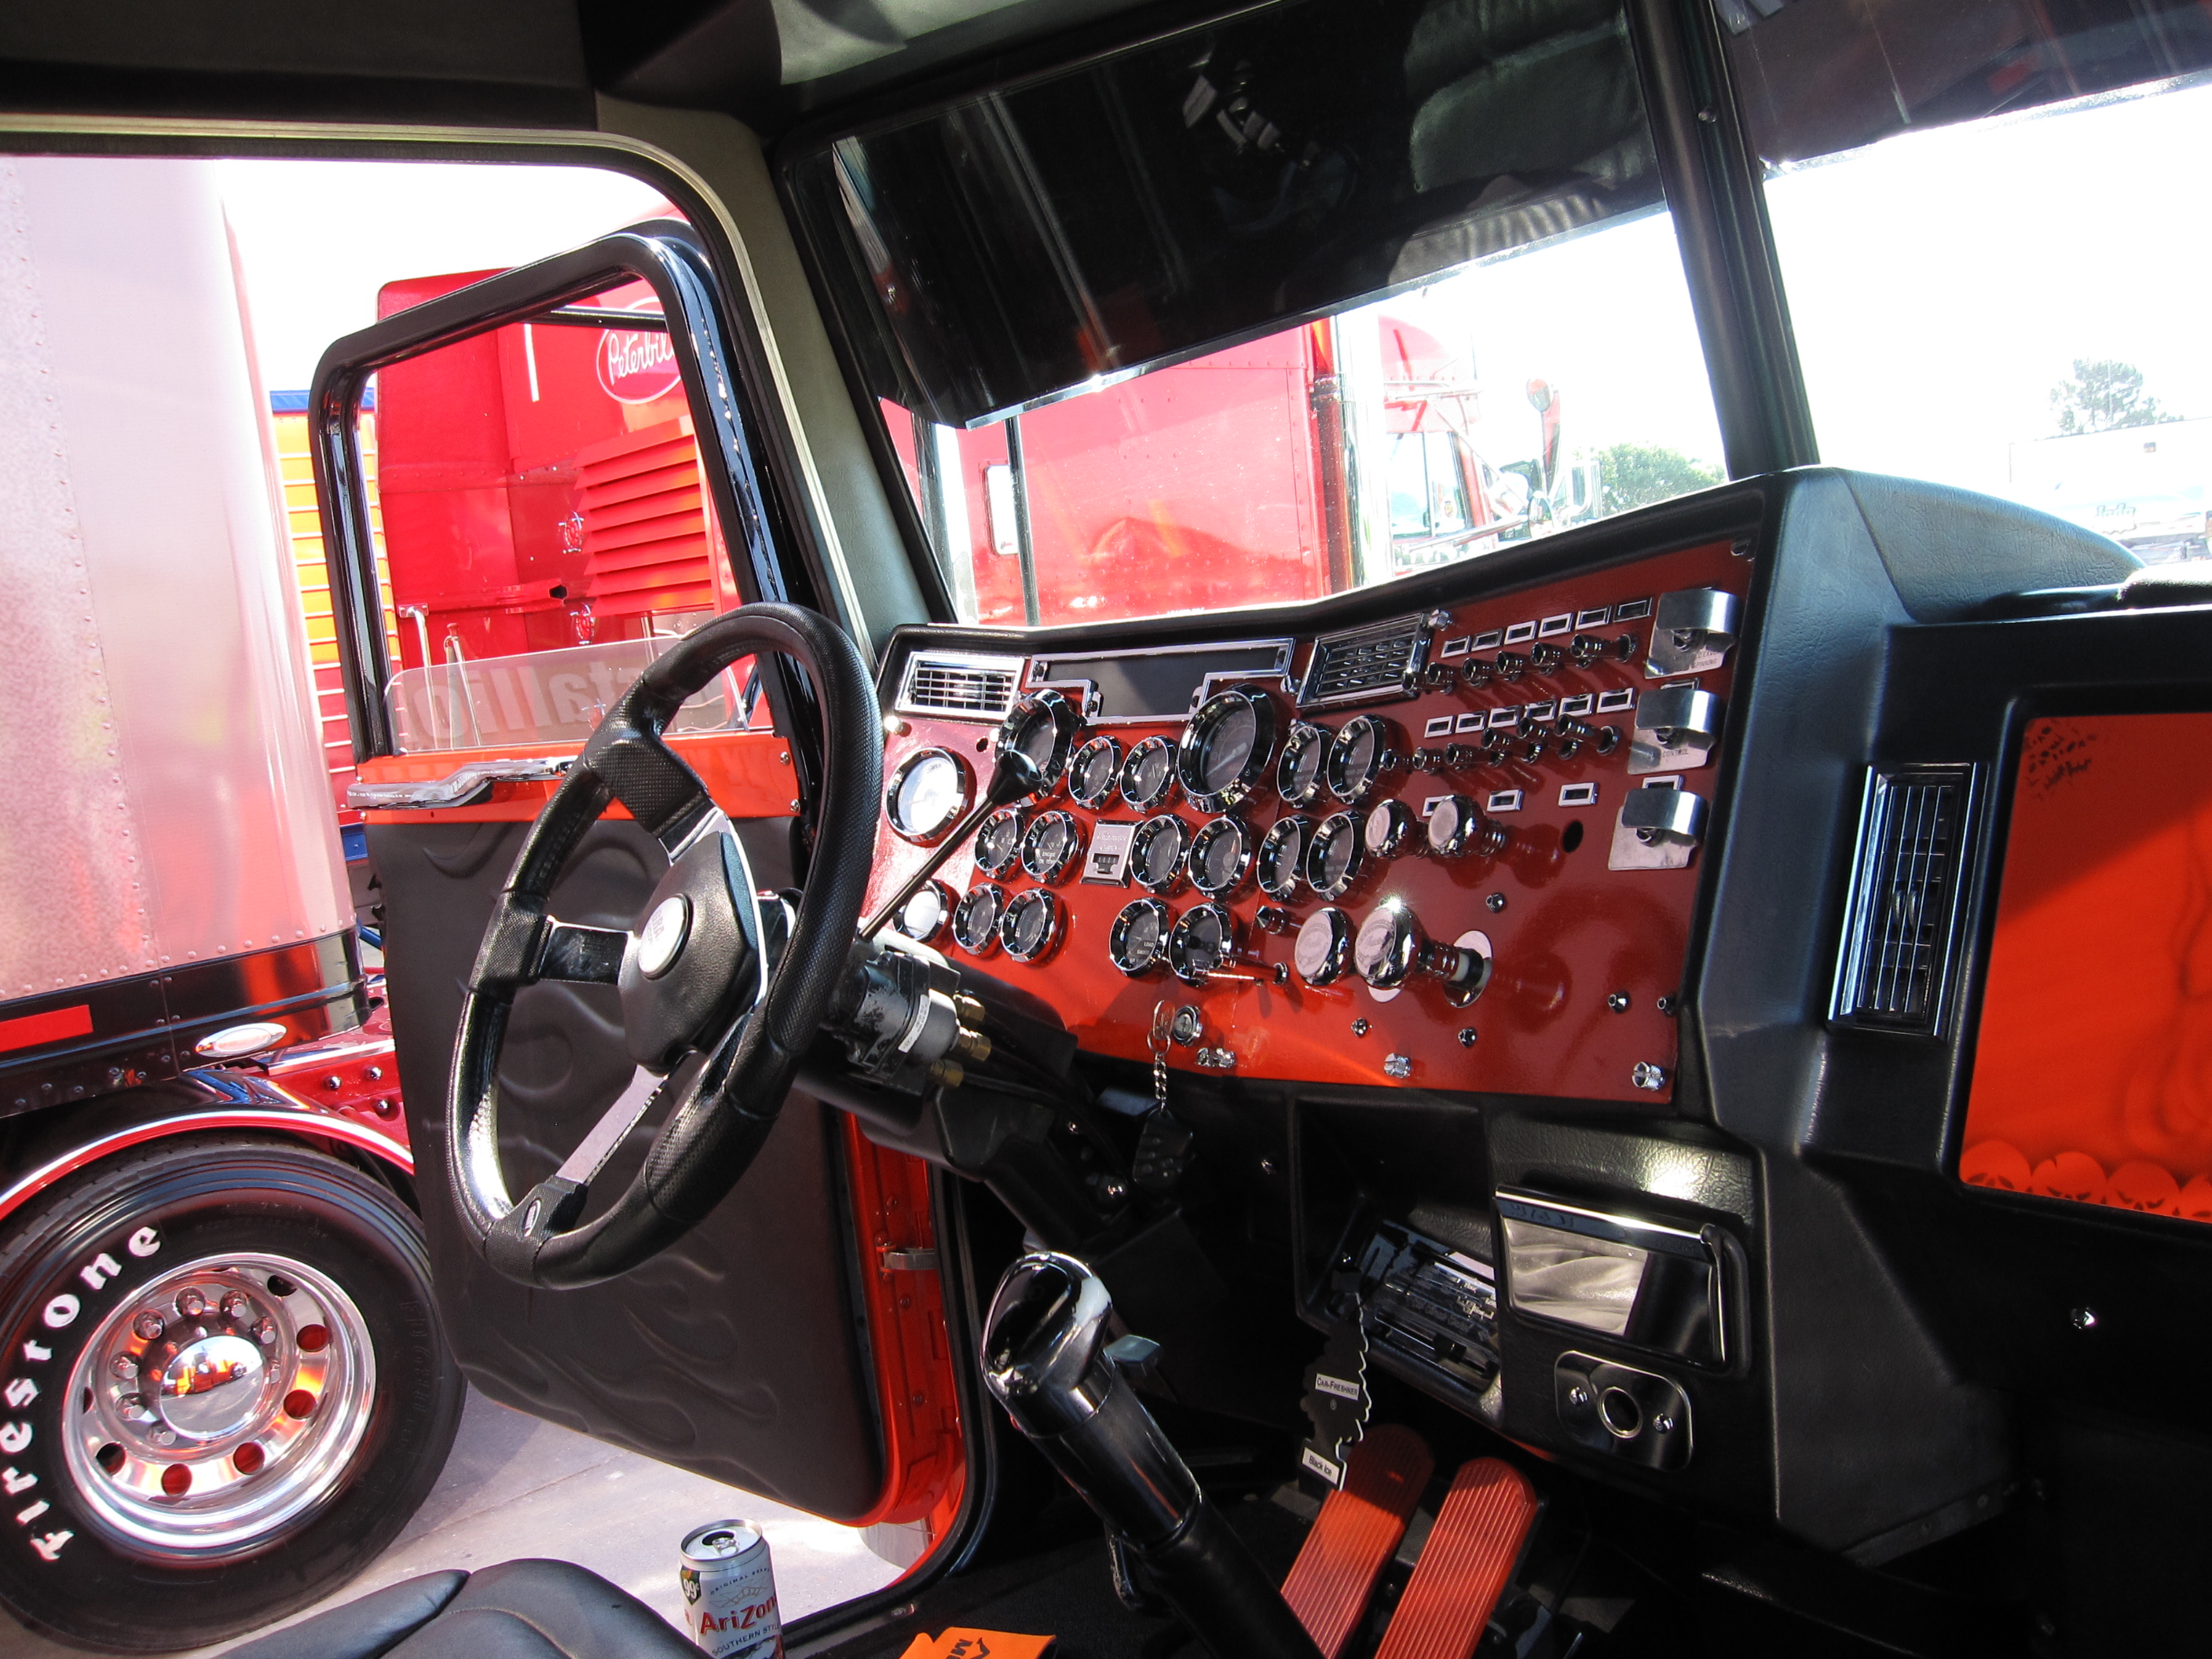 File:Peterbilt inside truck.jpg - Wikimedia Commons